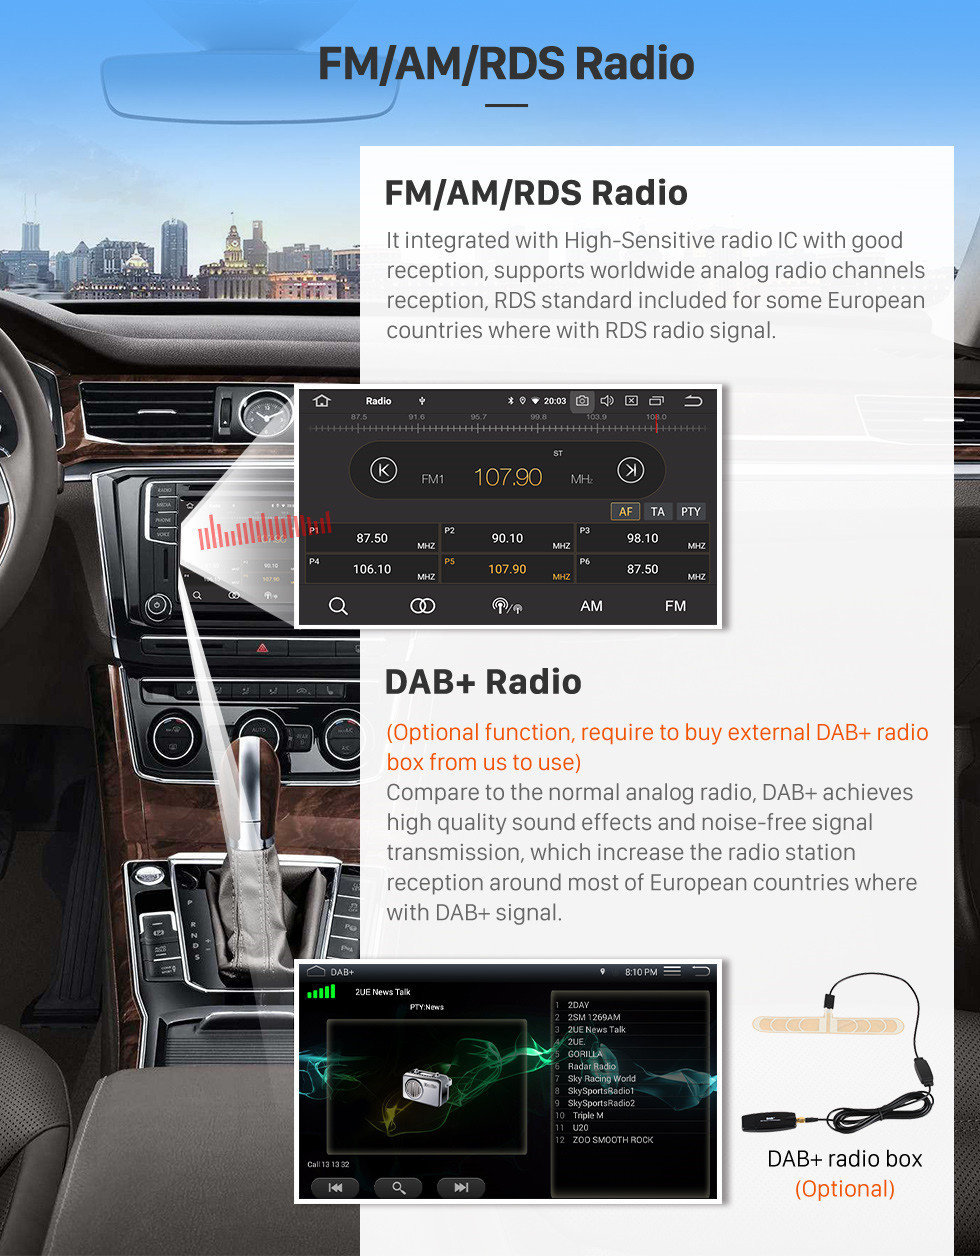 Seicane Chevrolet Daewoo Matiz / Spark / Baic / Beat Touchscreen Android 11.0 9 Zoll GPS-Navigations-Radio USB Bluetooth Carplay AUX unterstützt DVR OBD2